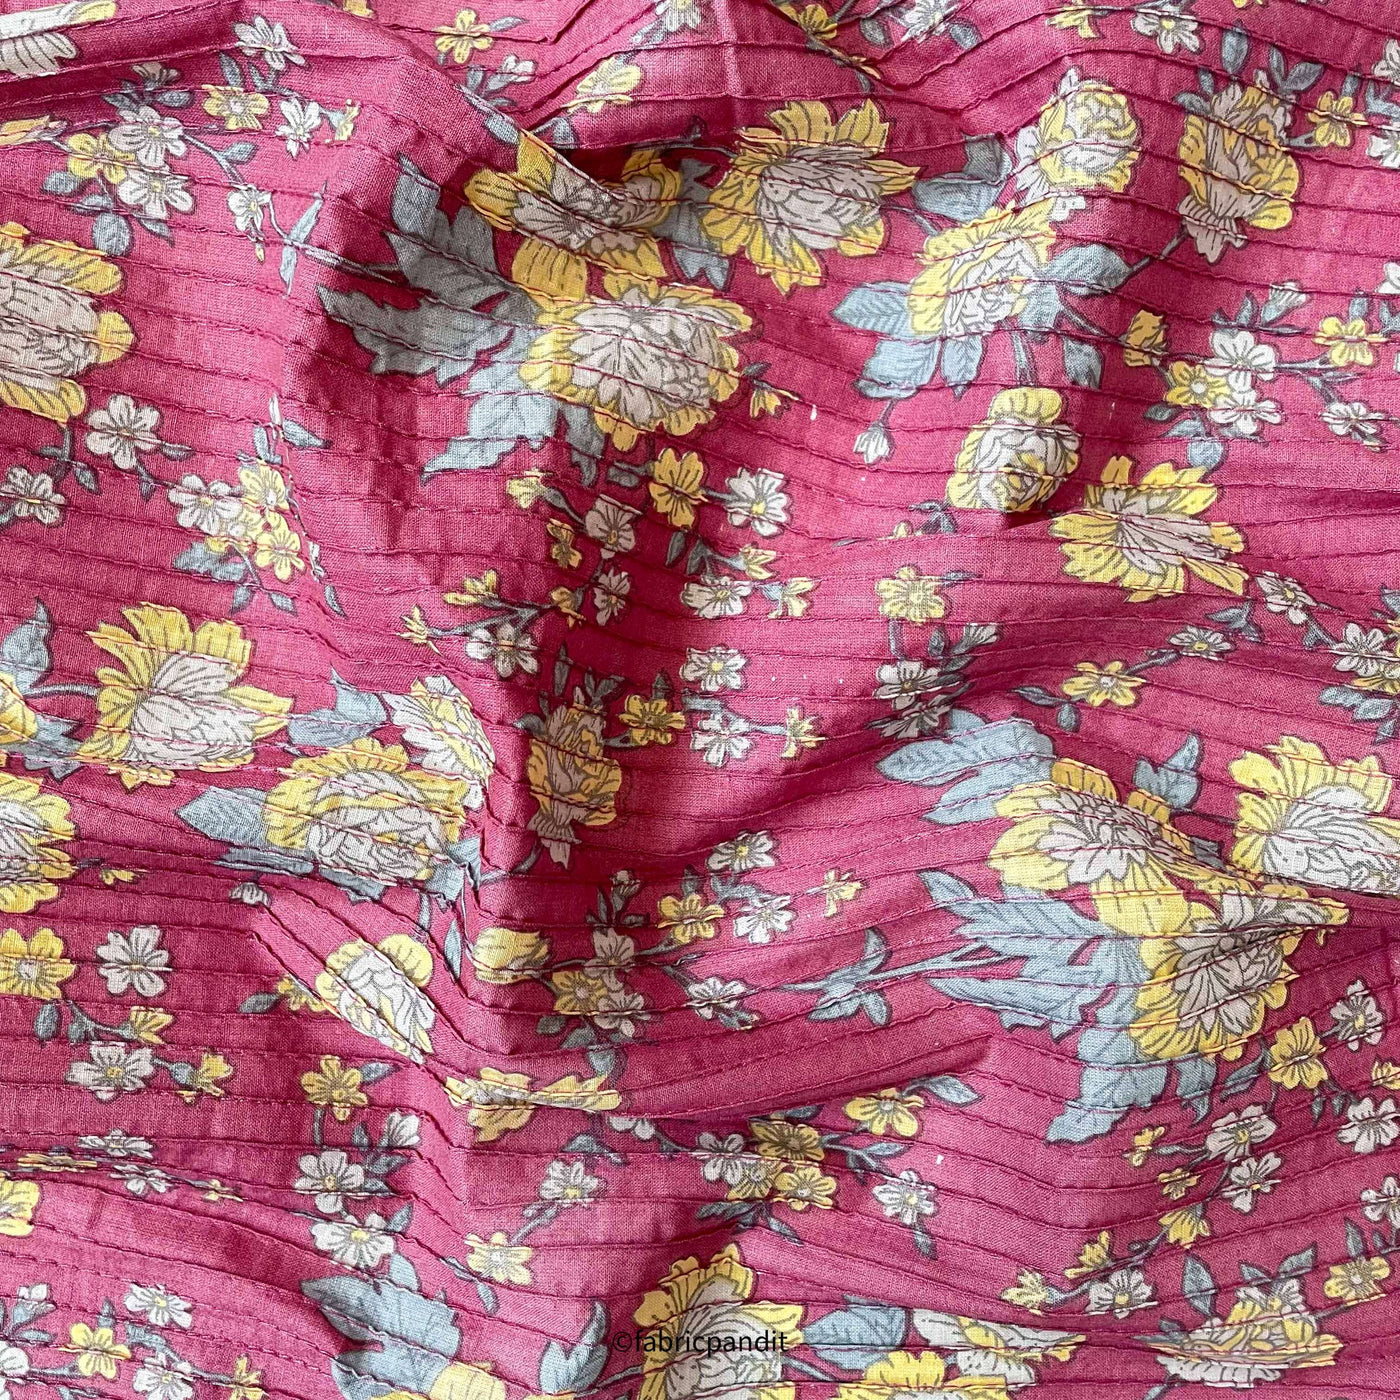 Fabric Pandit Kurta Set Light Ruby Red & Yellow Wild Flower Garden Pintucks | Hand Block Printed Pure Cotton Kurta Fabric (3.2 Meters) | and Cotton Pyjama (2.5 Meters) | Unstitched Combo Set